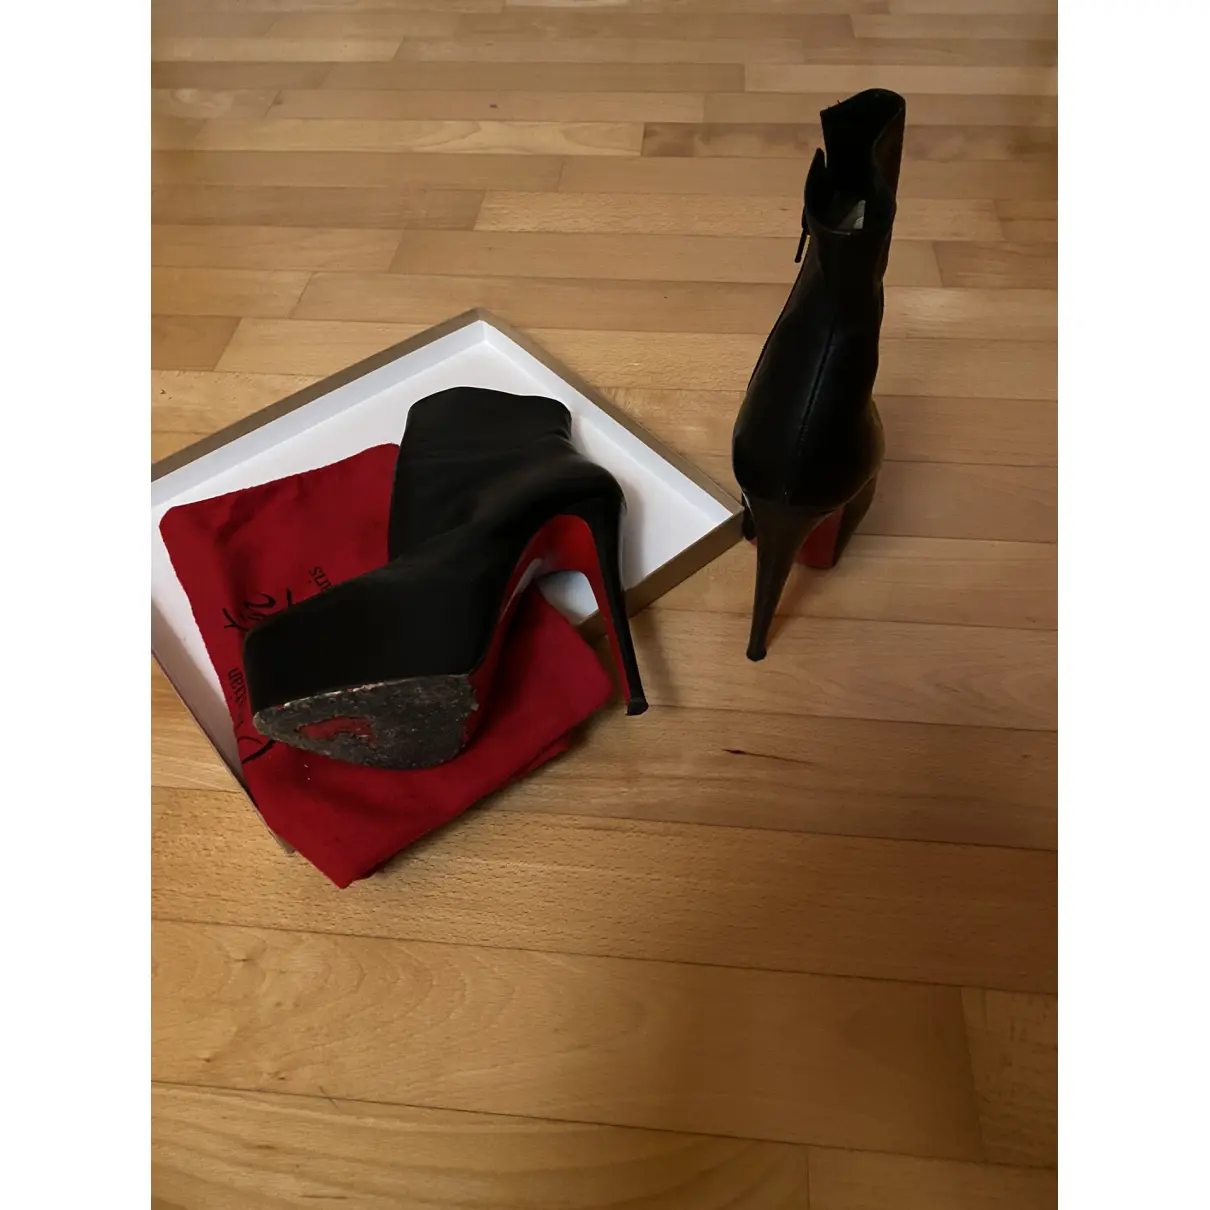 Luxury Christian Louboutin Ankle boots Women